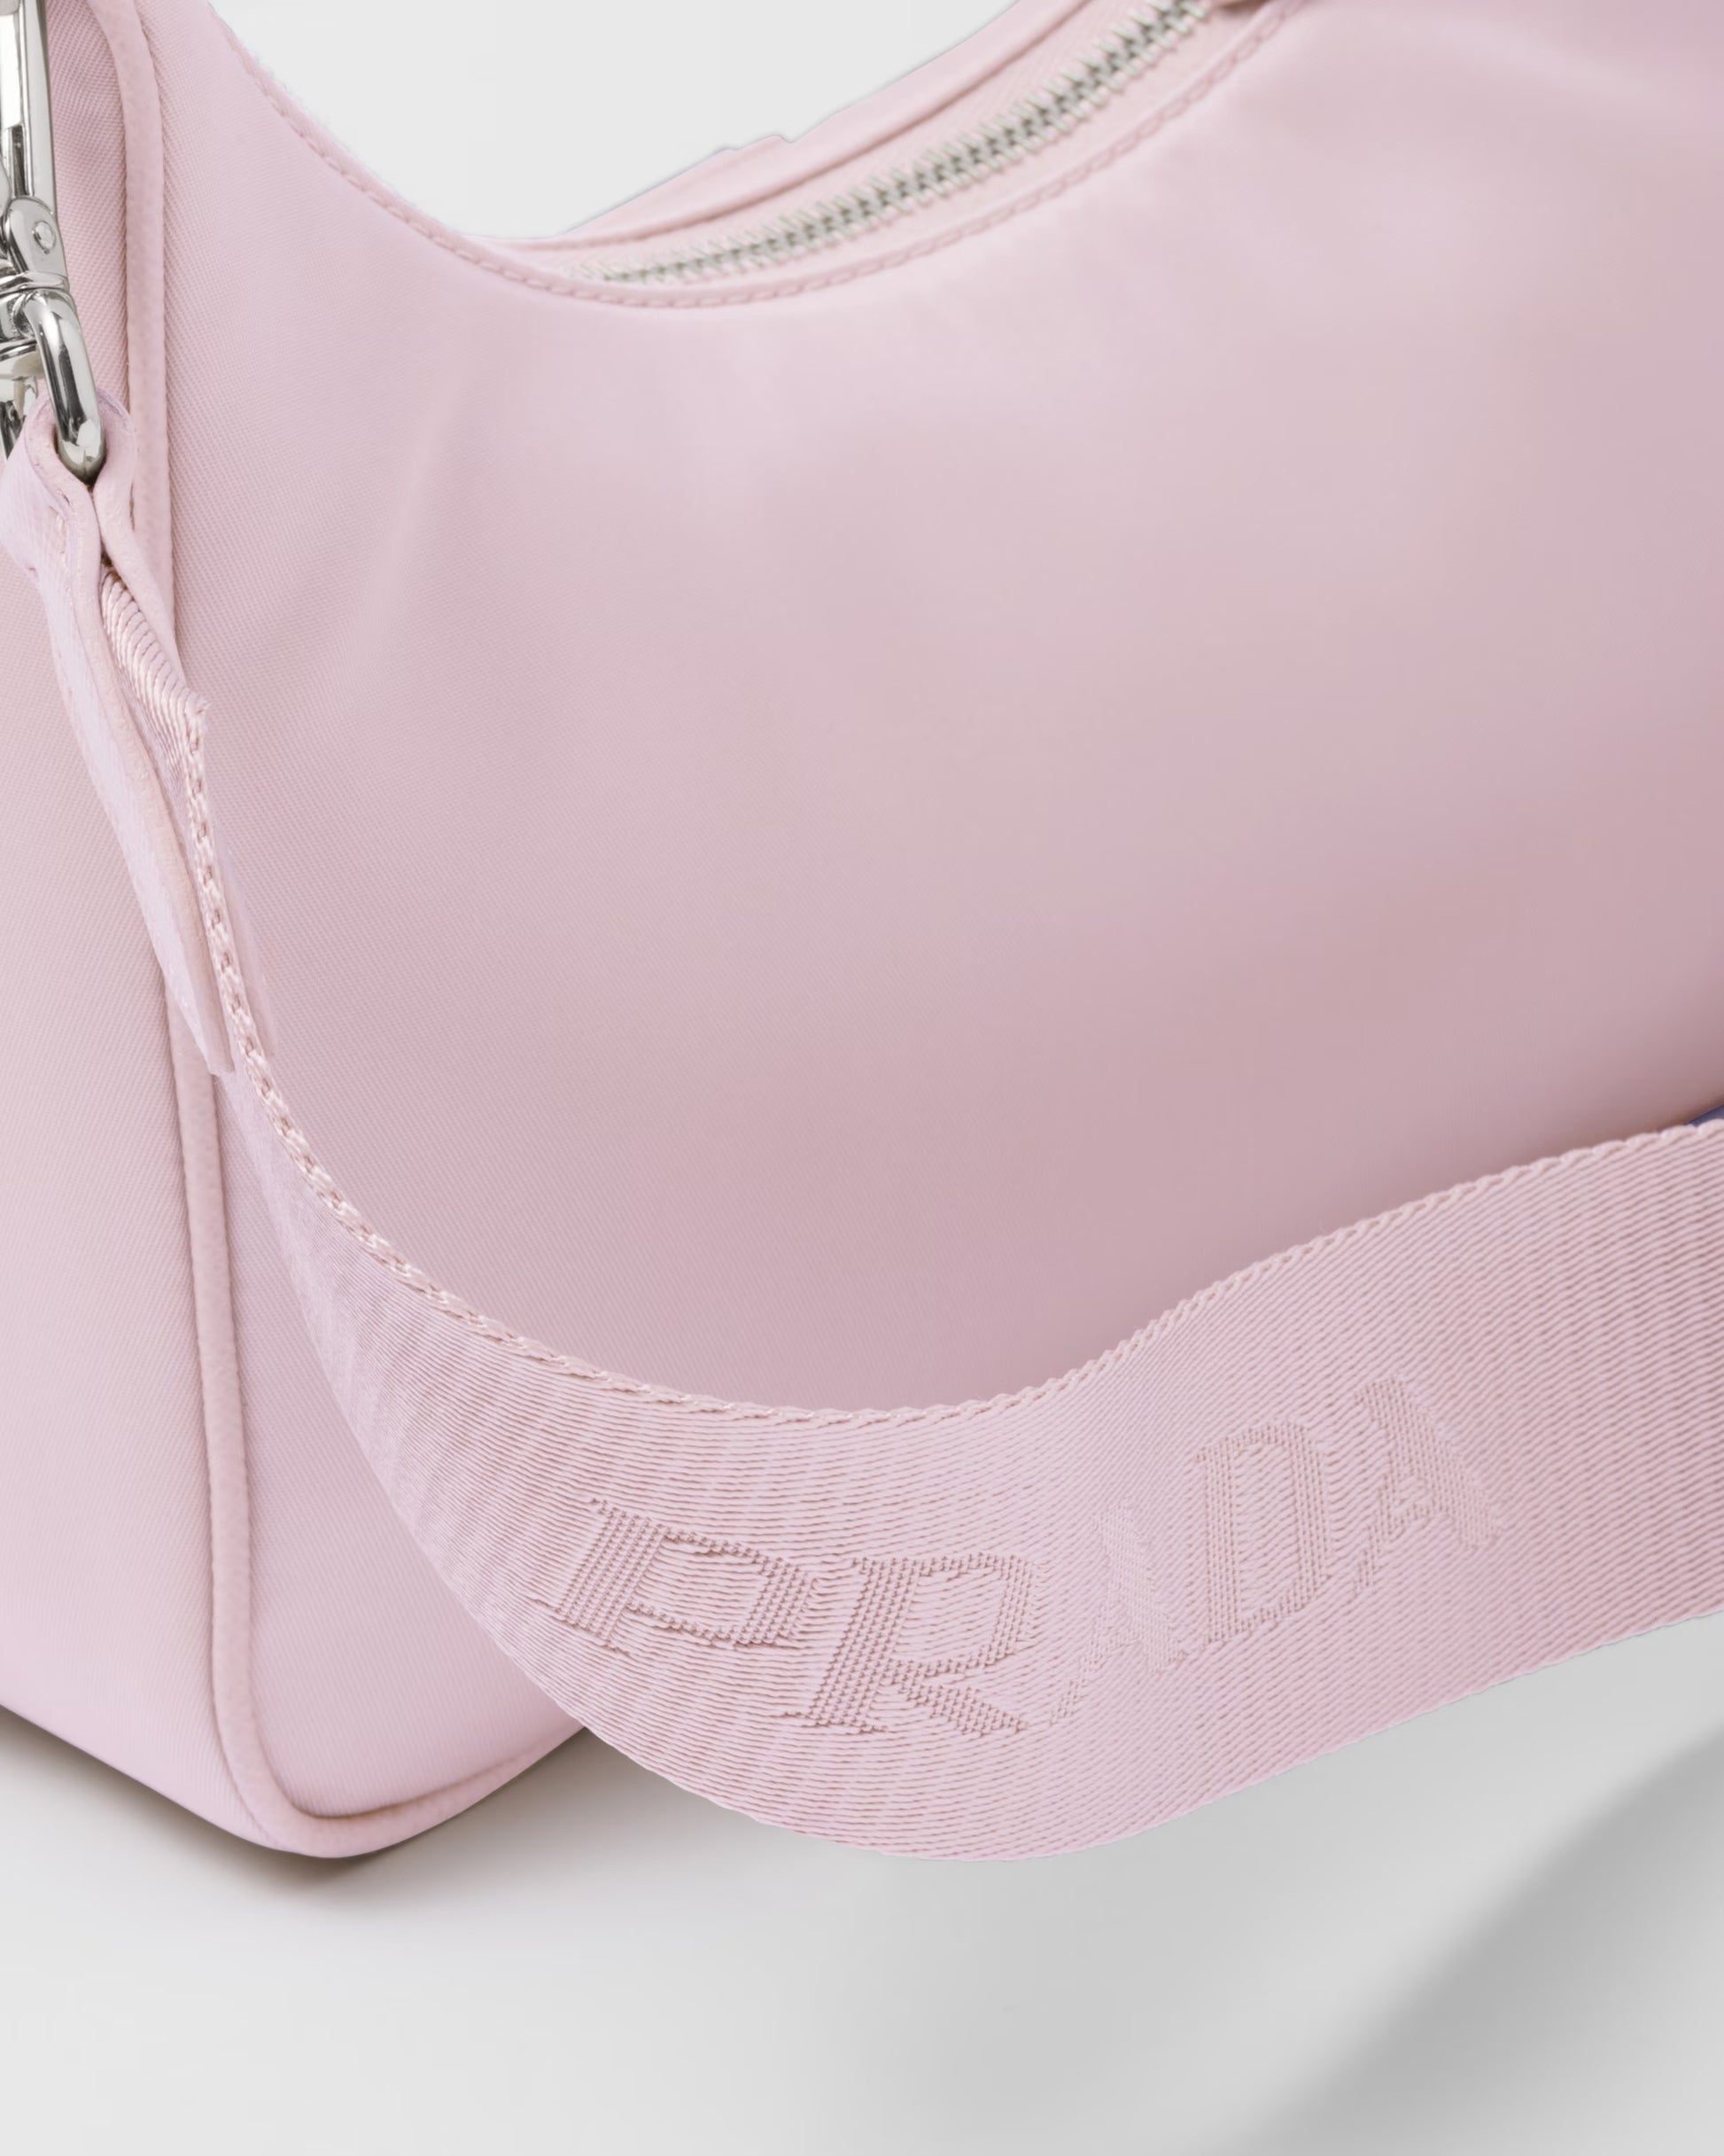 Prada Re-Edition 2000 Re-Nylon Mini Bag Alabaster Pink in Re-Nylon